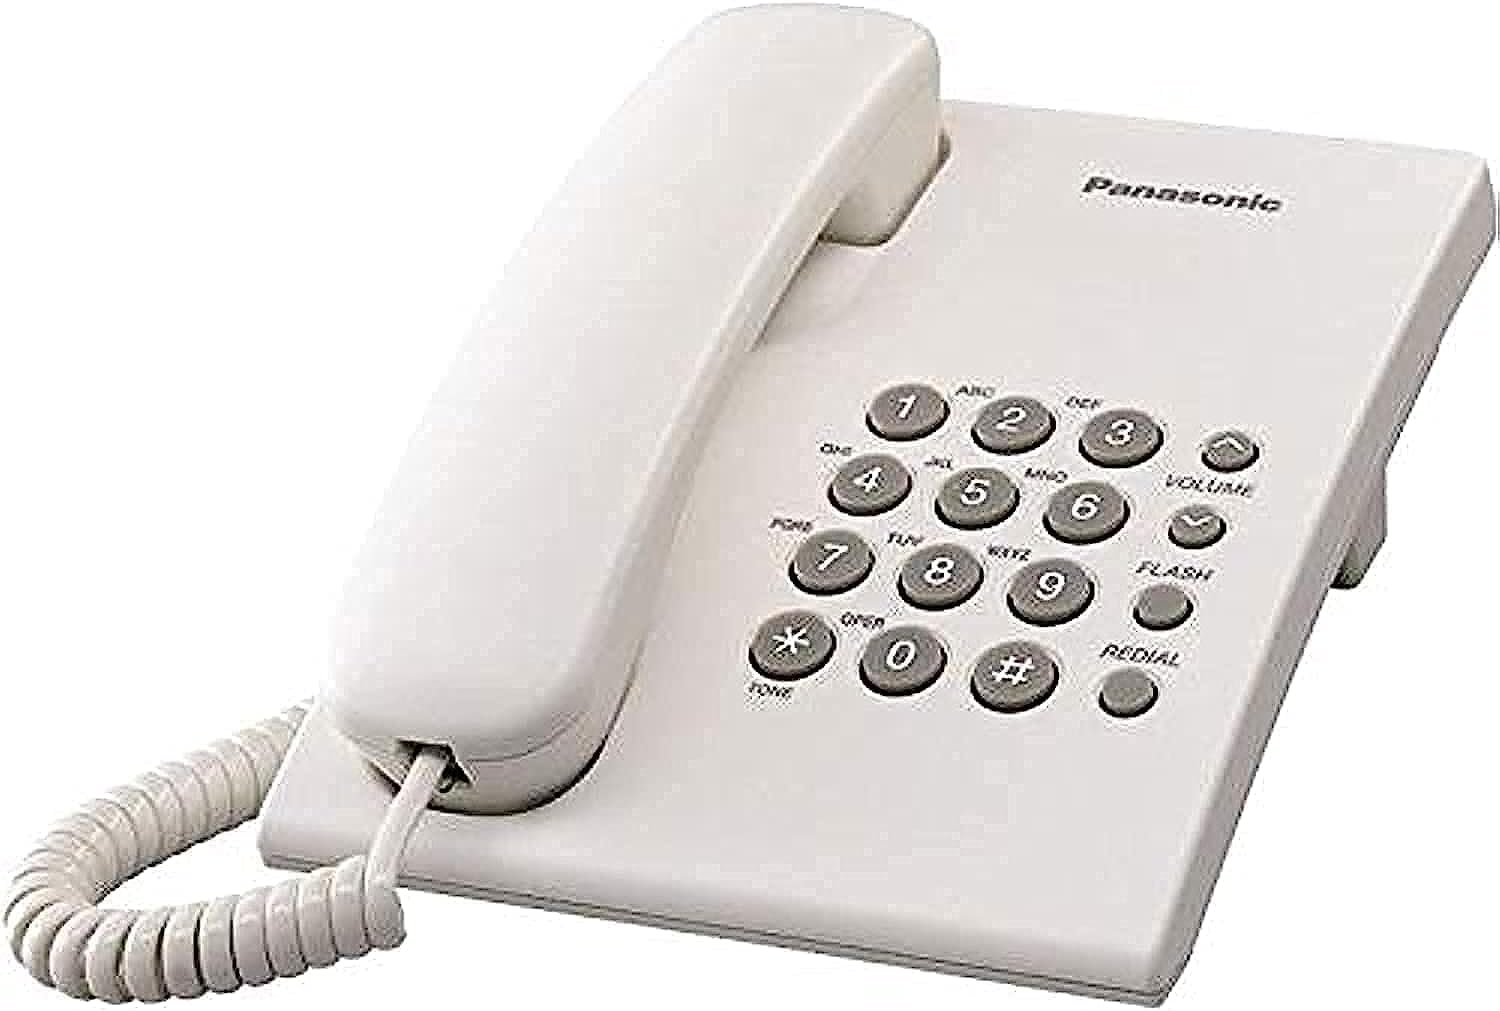 Panasonic KX-TS500 Corded Telephone Made in Malaysia - White